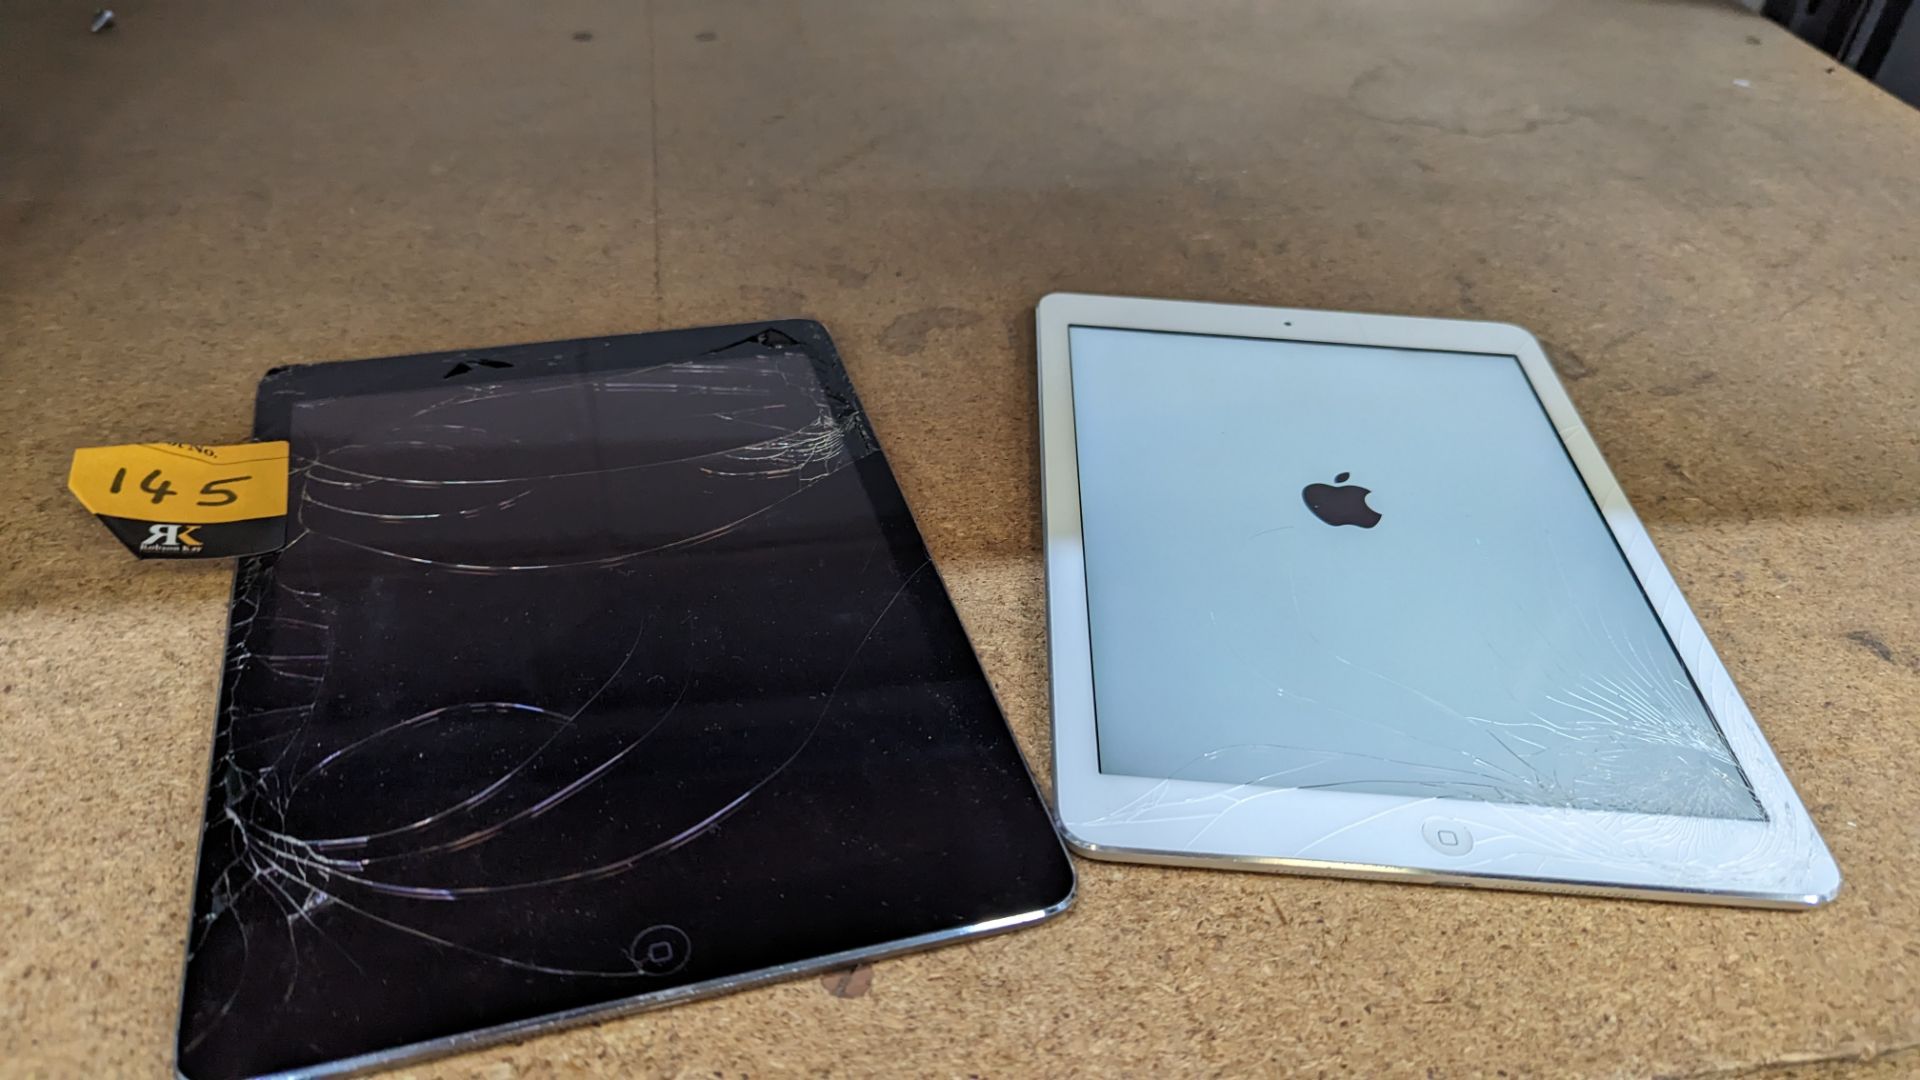 2 off Apple iPad tablets, both model no. A1474, with damaged screens. No ancillaries